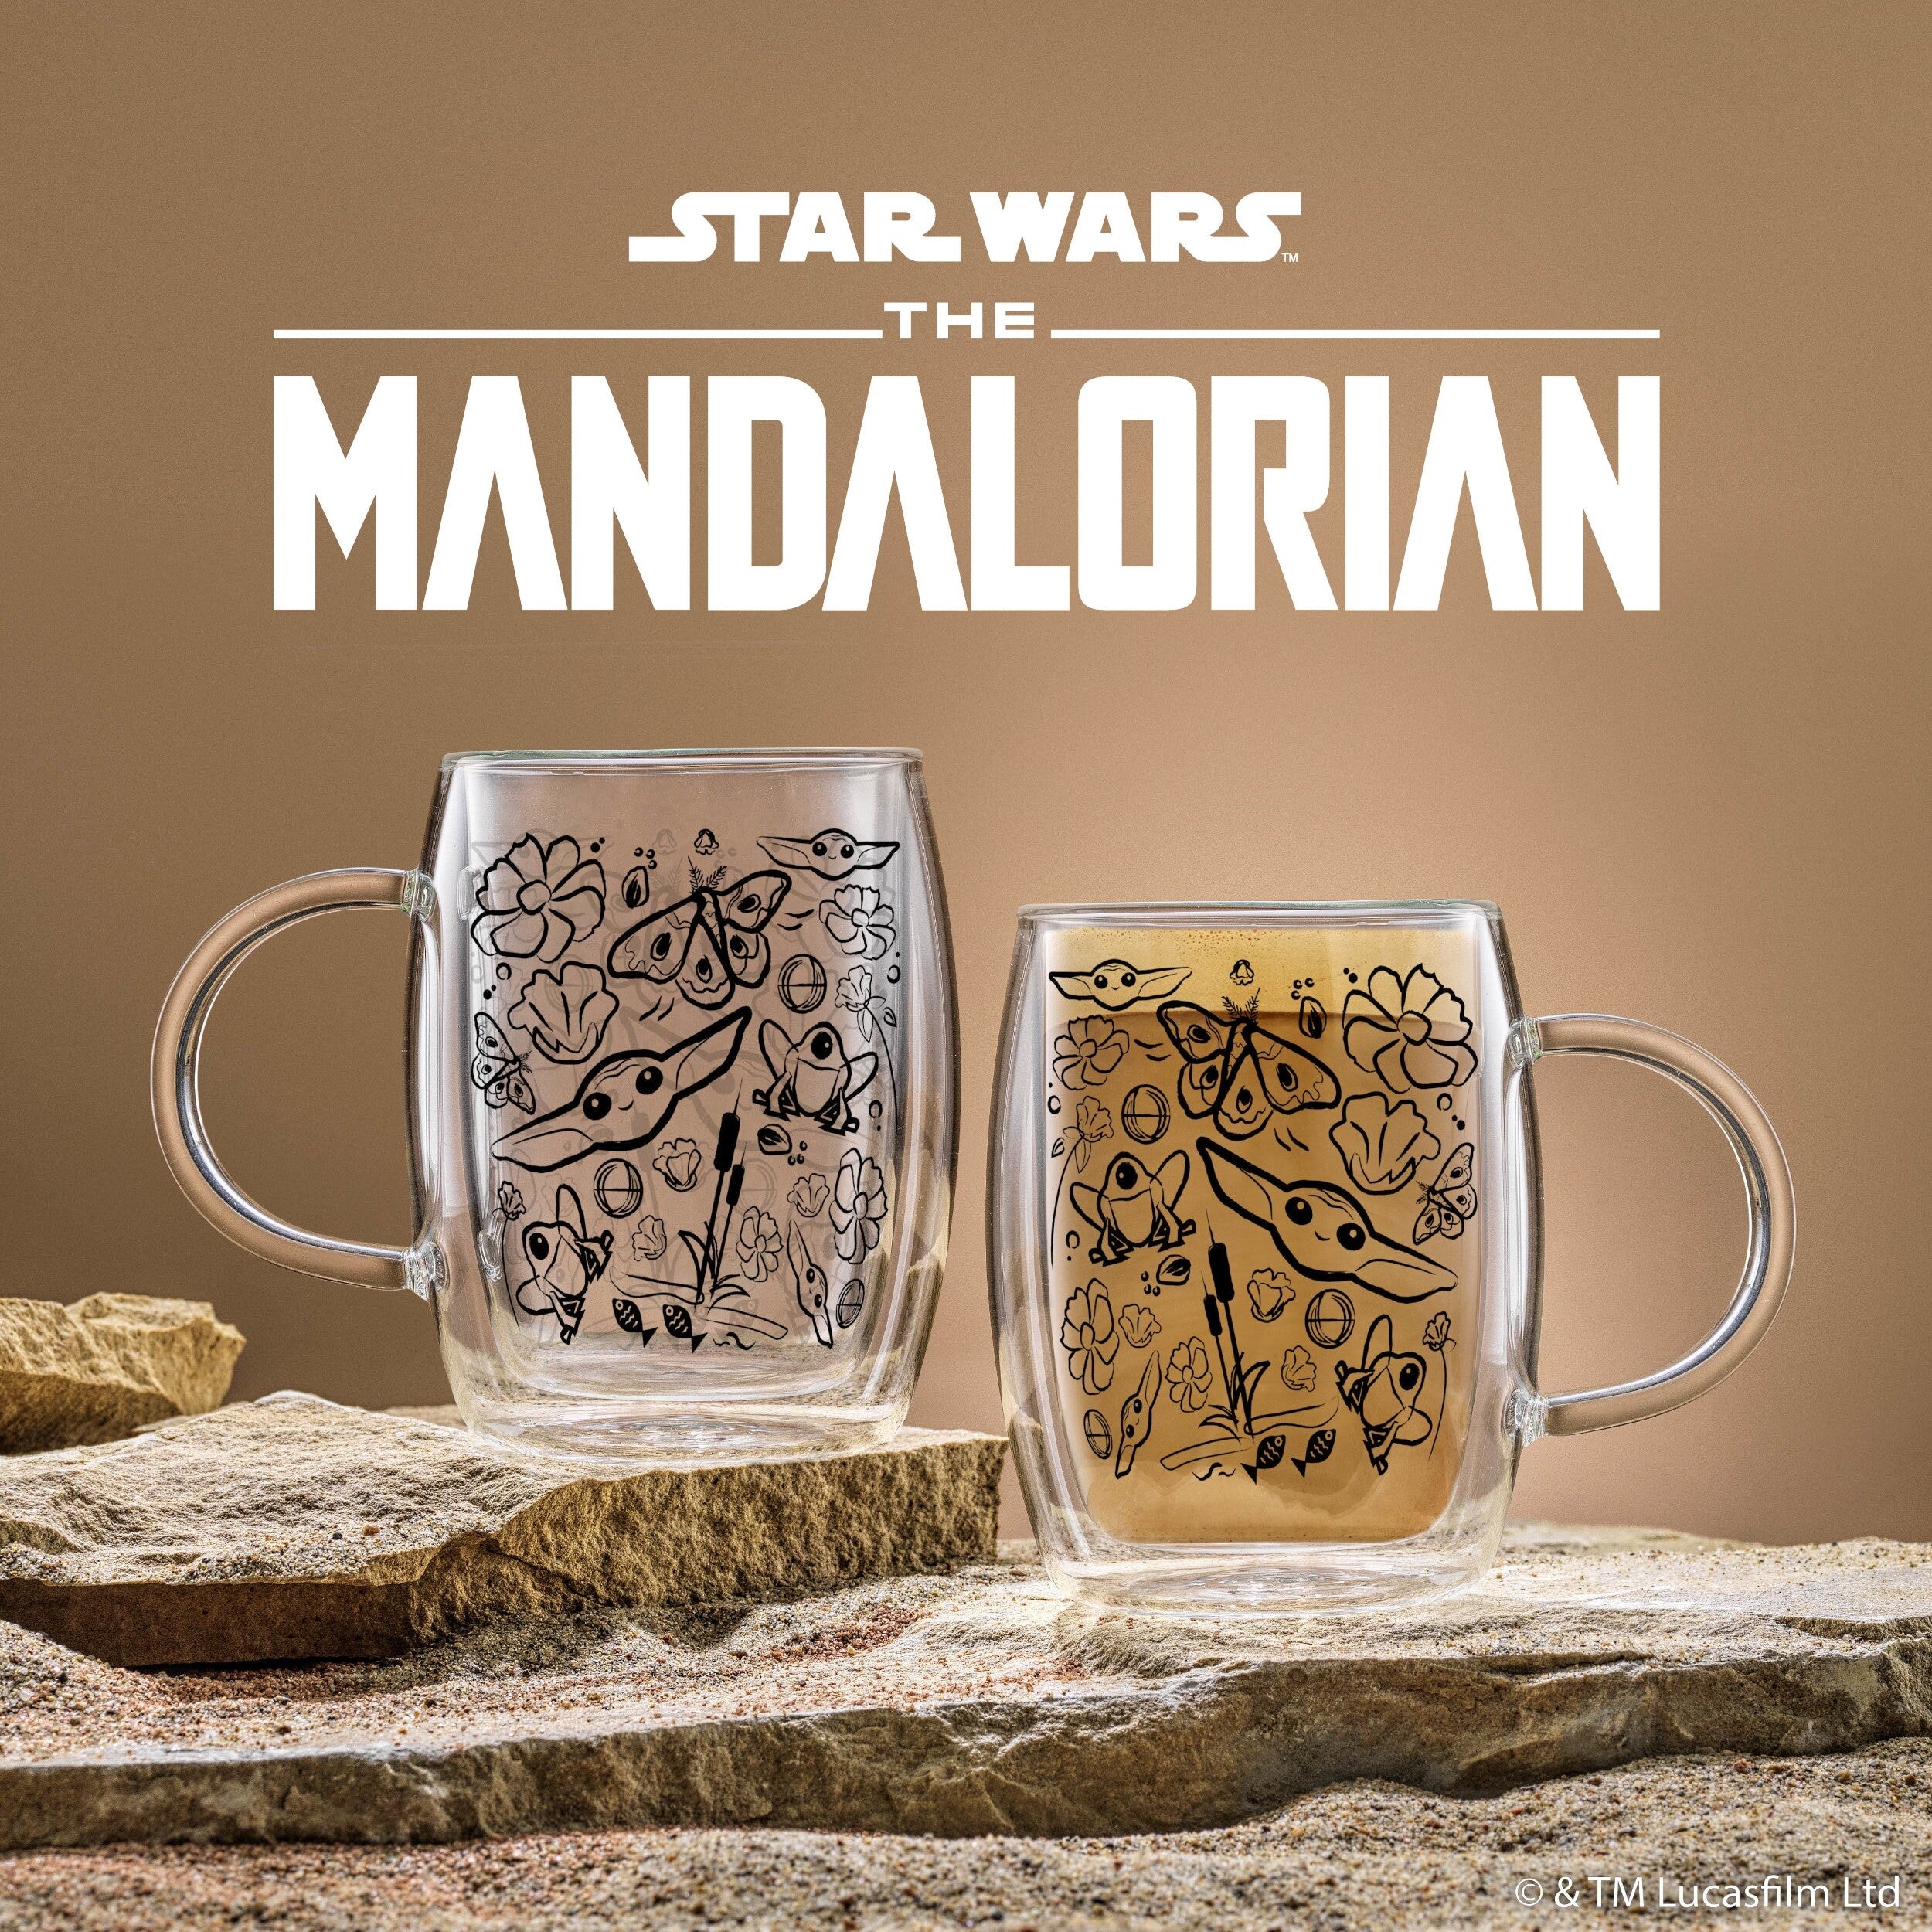 Star Wars The Mandalorian Watching The Drama Double Wall Glass Mugs - 13.5 oz - Set of 2 - Clear